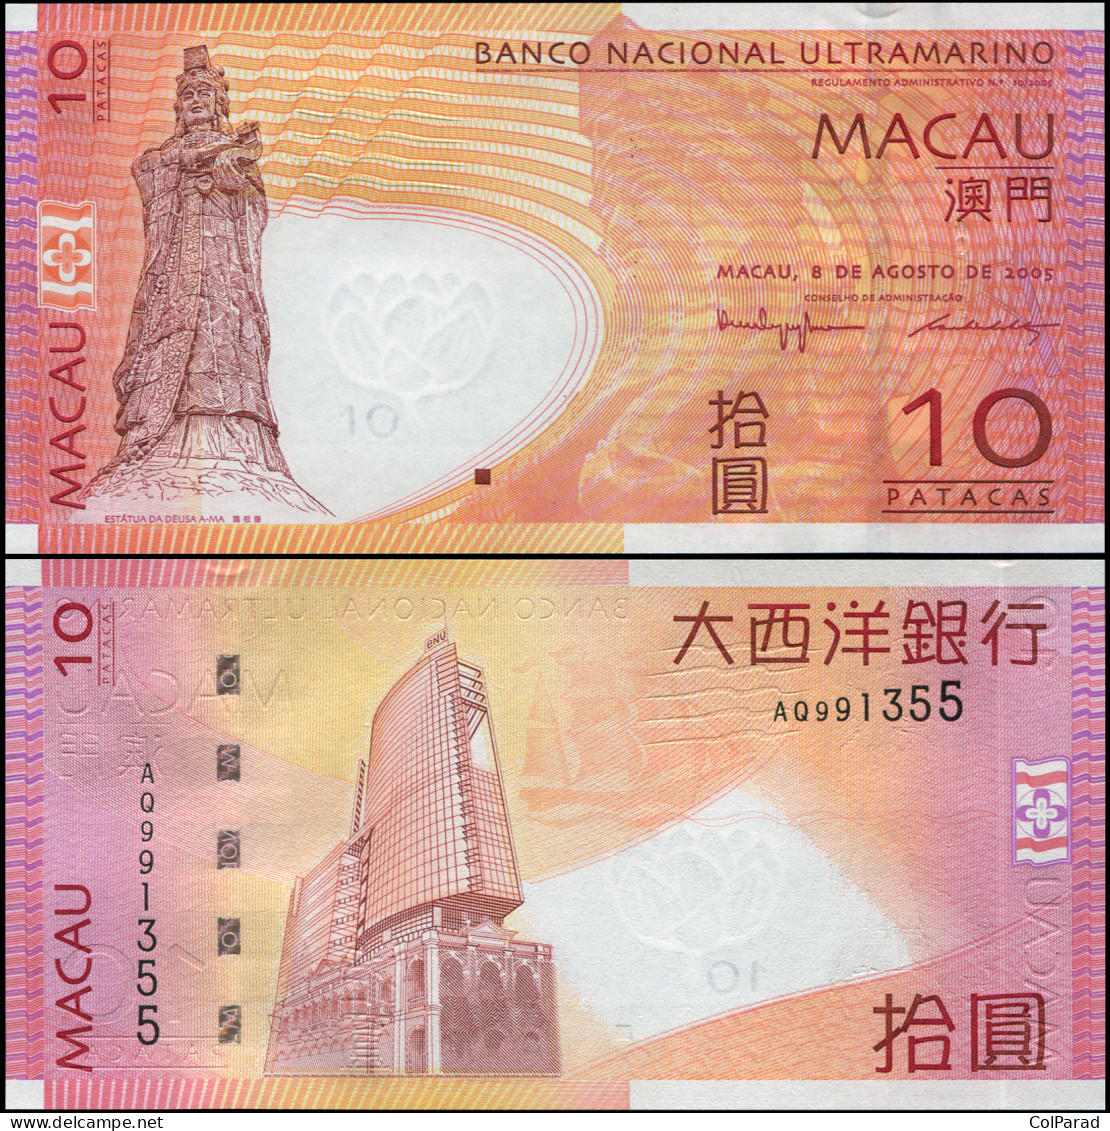 MACAO 10 PATACAS - 08.08.2005 - Paper Unc - P.80a Banknote - Macao